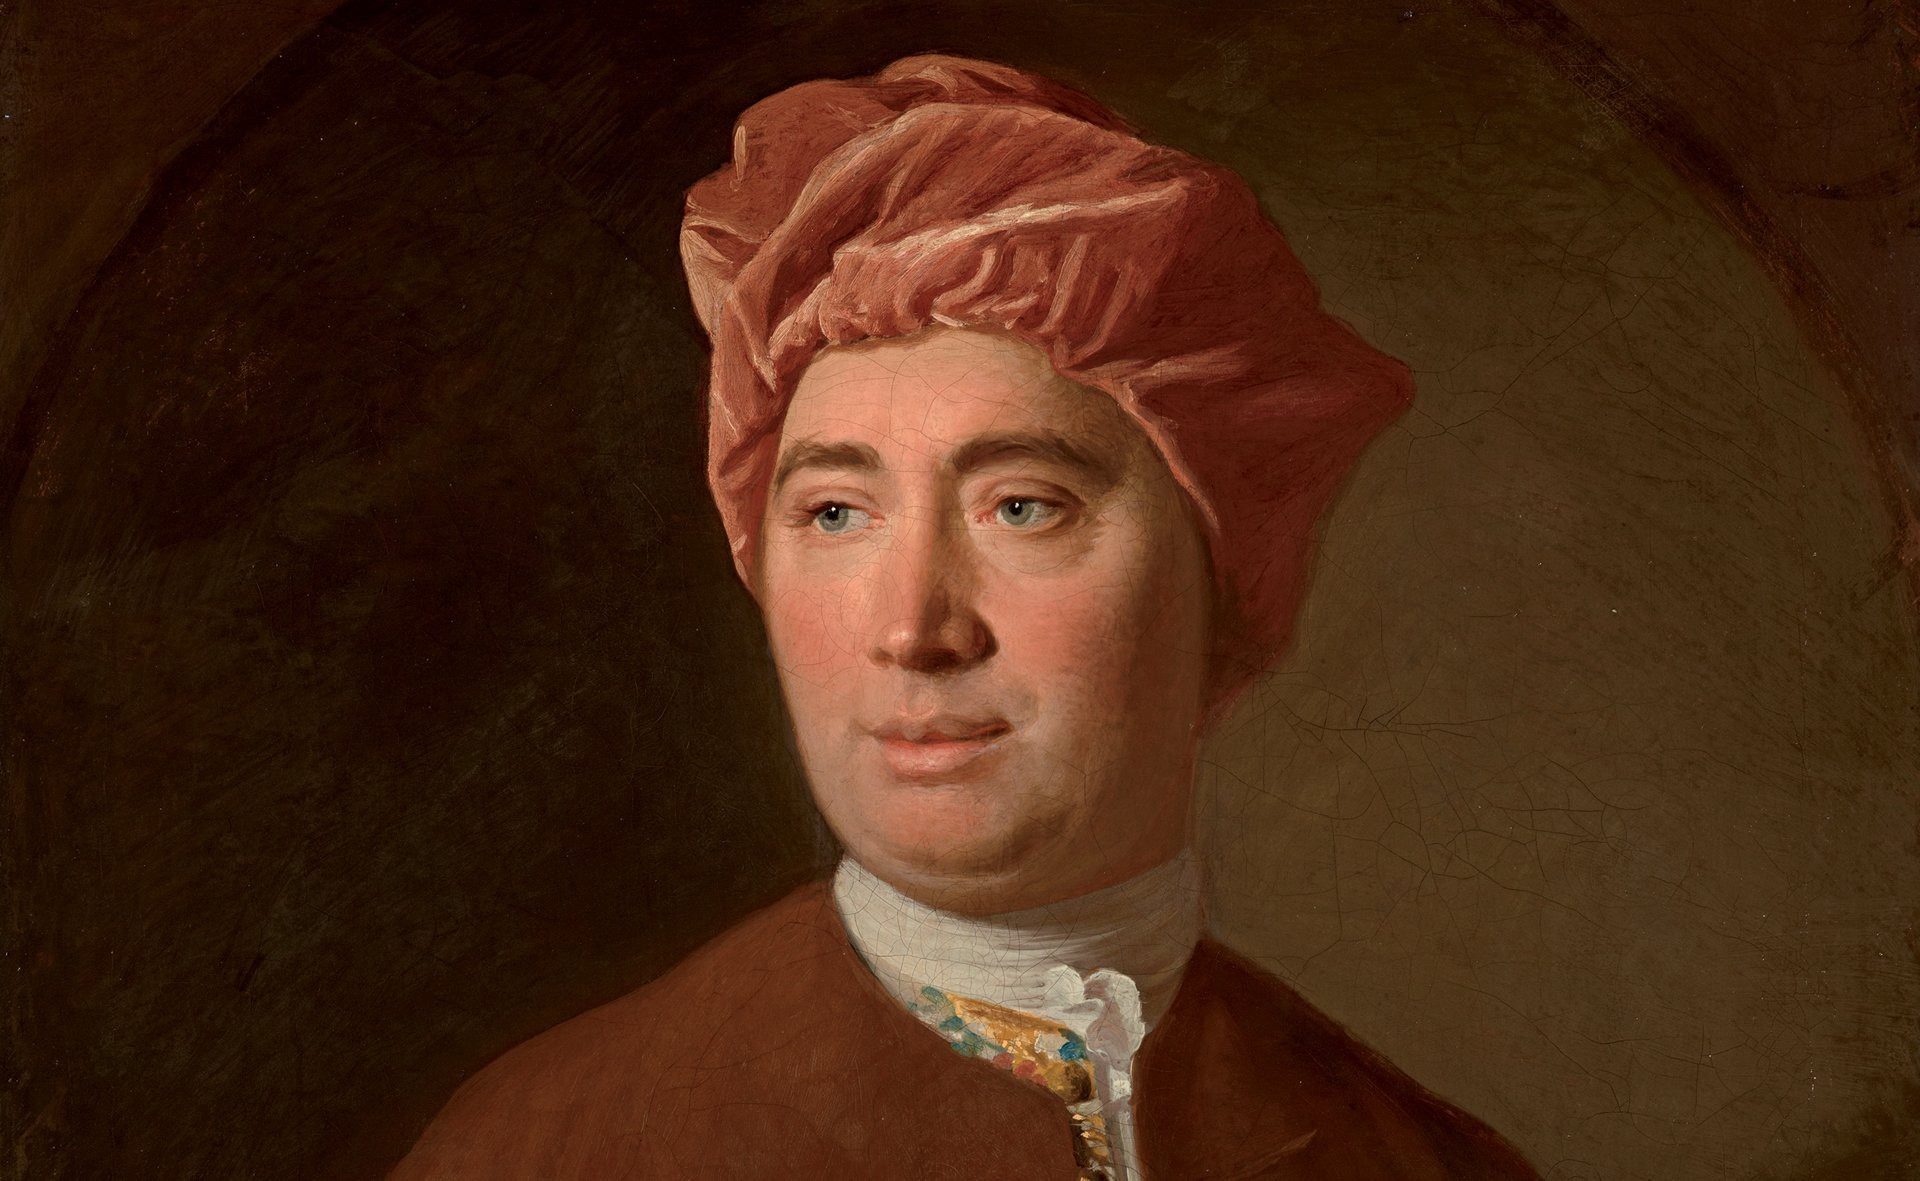 David Hume philosophy